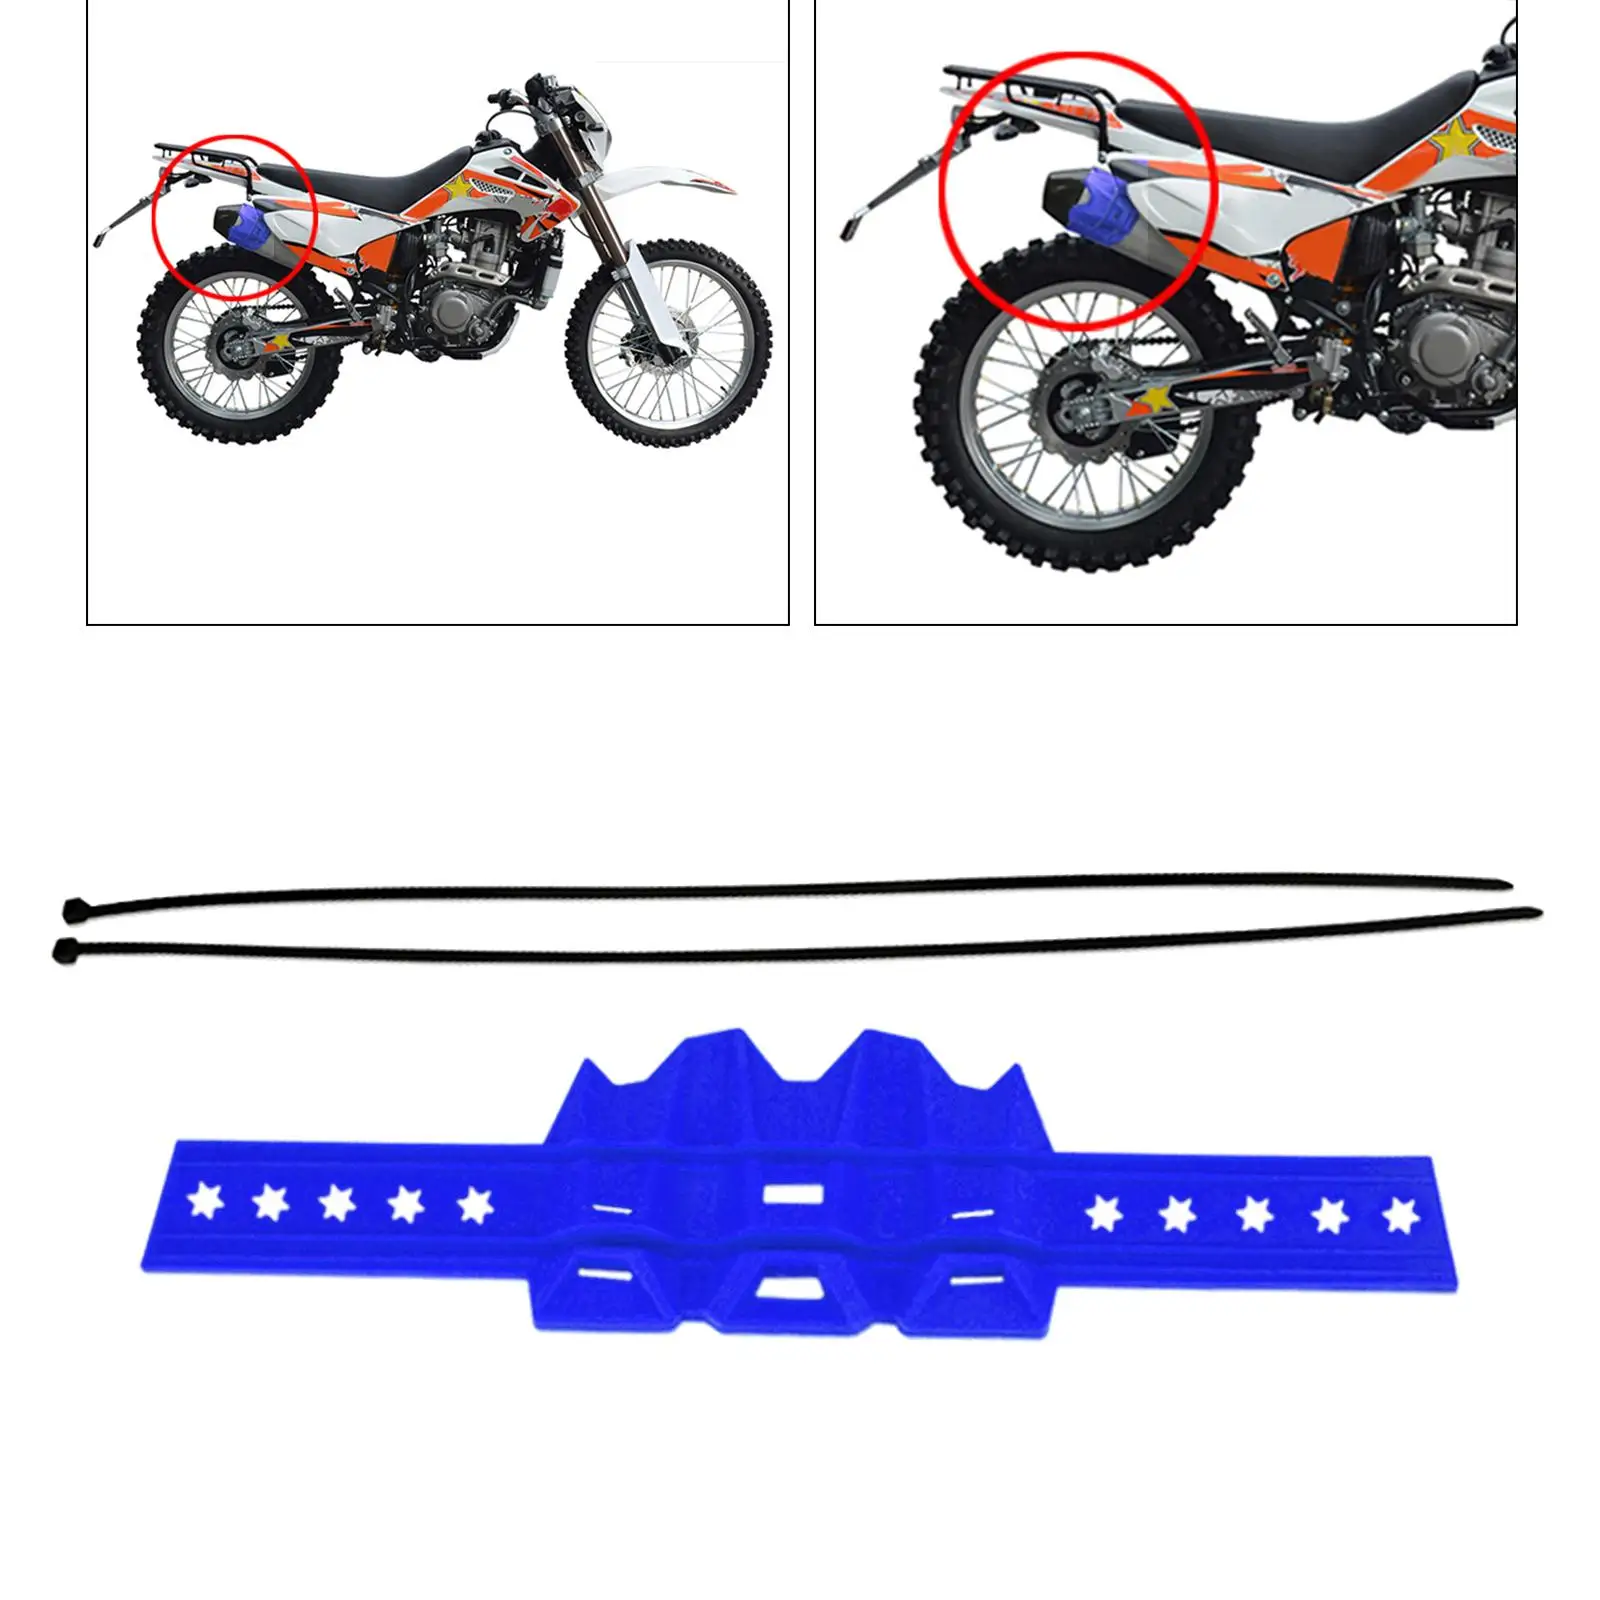 Exhaust Muffler Tailpipe Cover Guard Protector Universal for 2-stroke 4-stroke Motorcycle Dirt Bike Motorcross